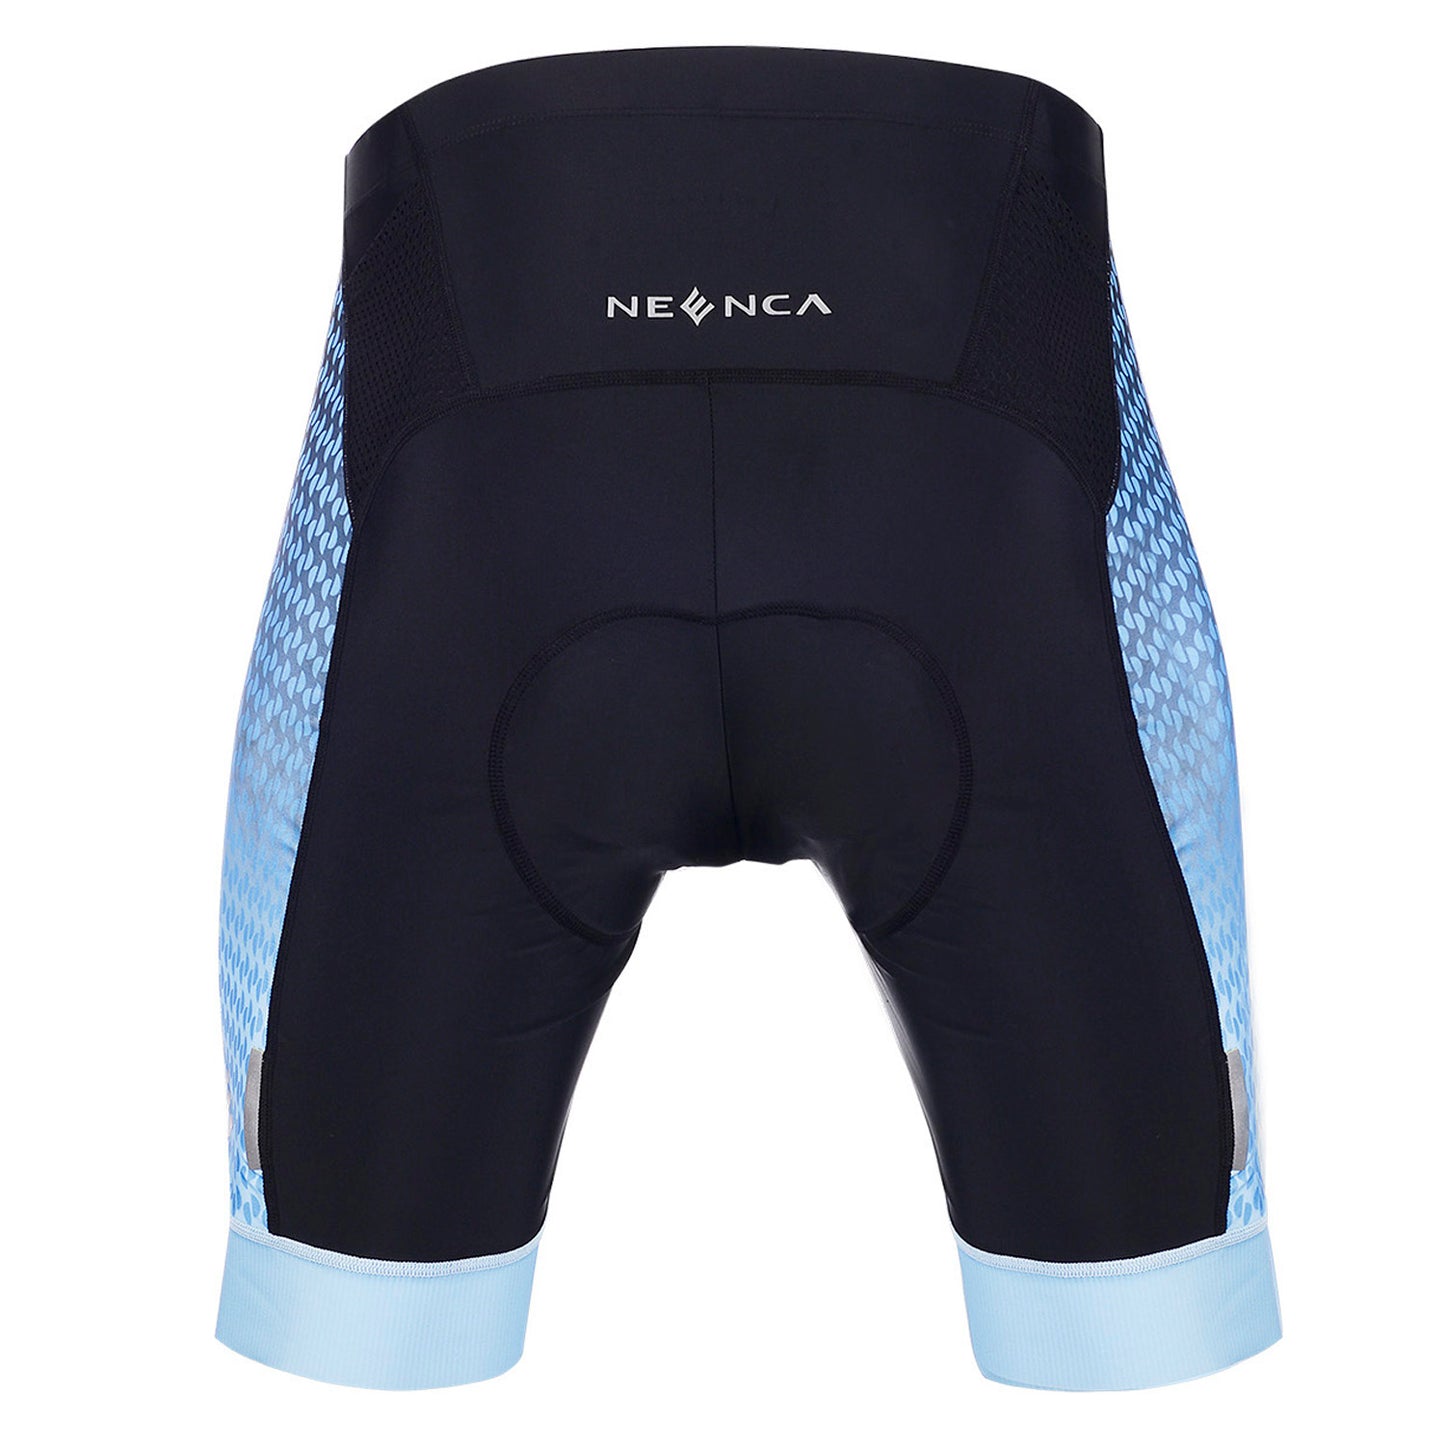 Neenca Men's Cycling Underwear Breathable Pants